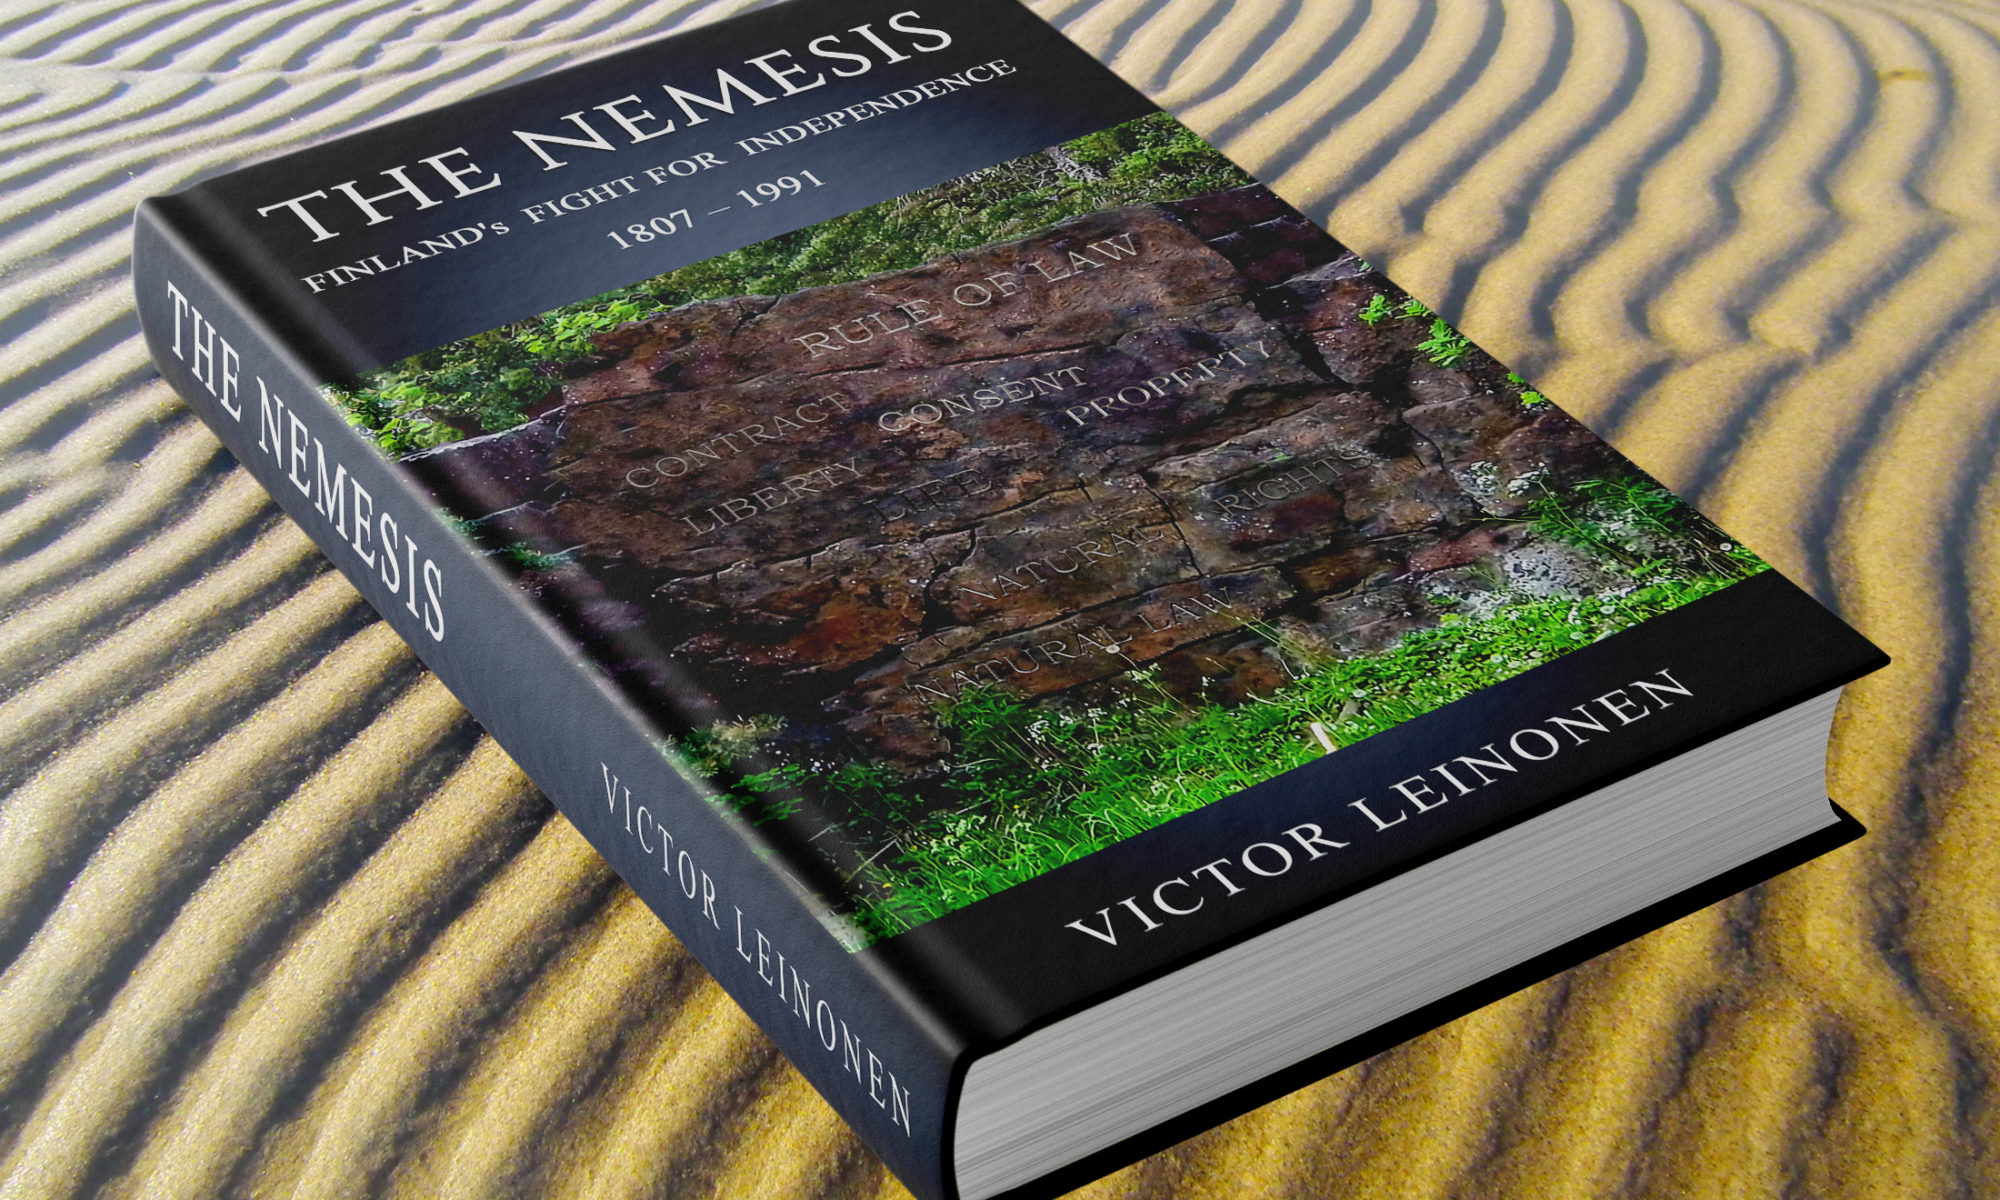 The Nemesis book